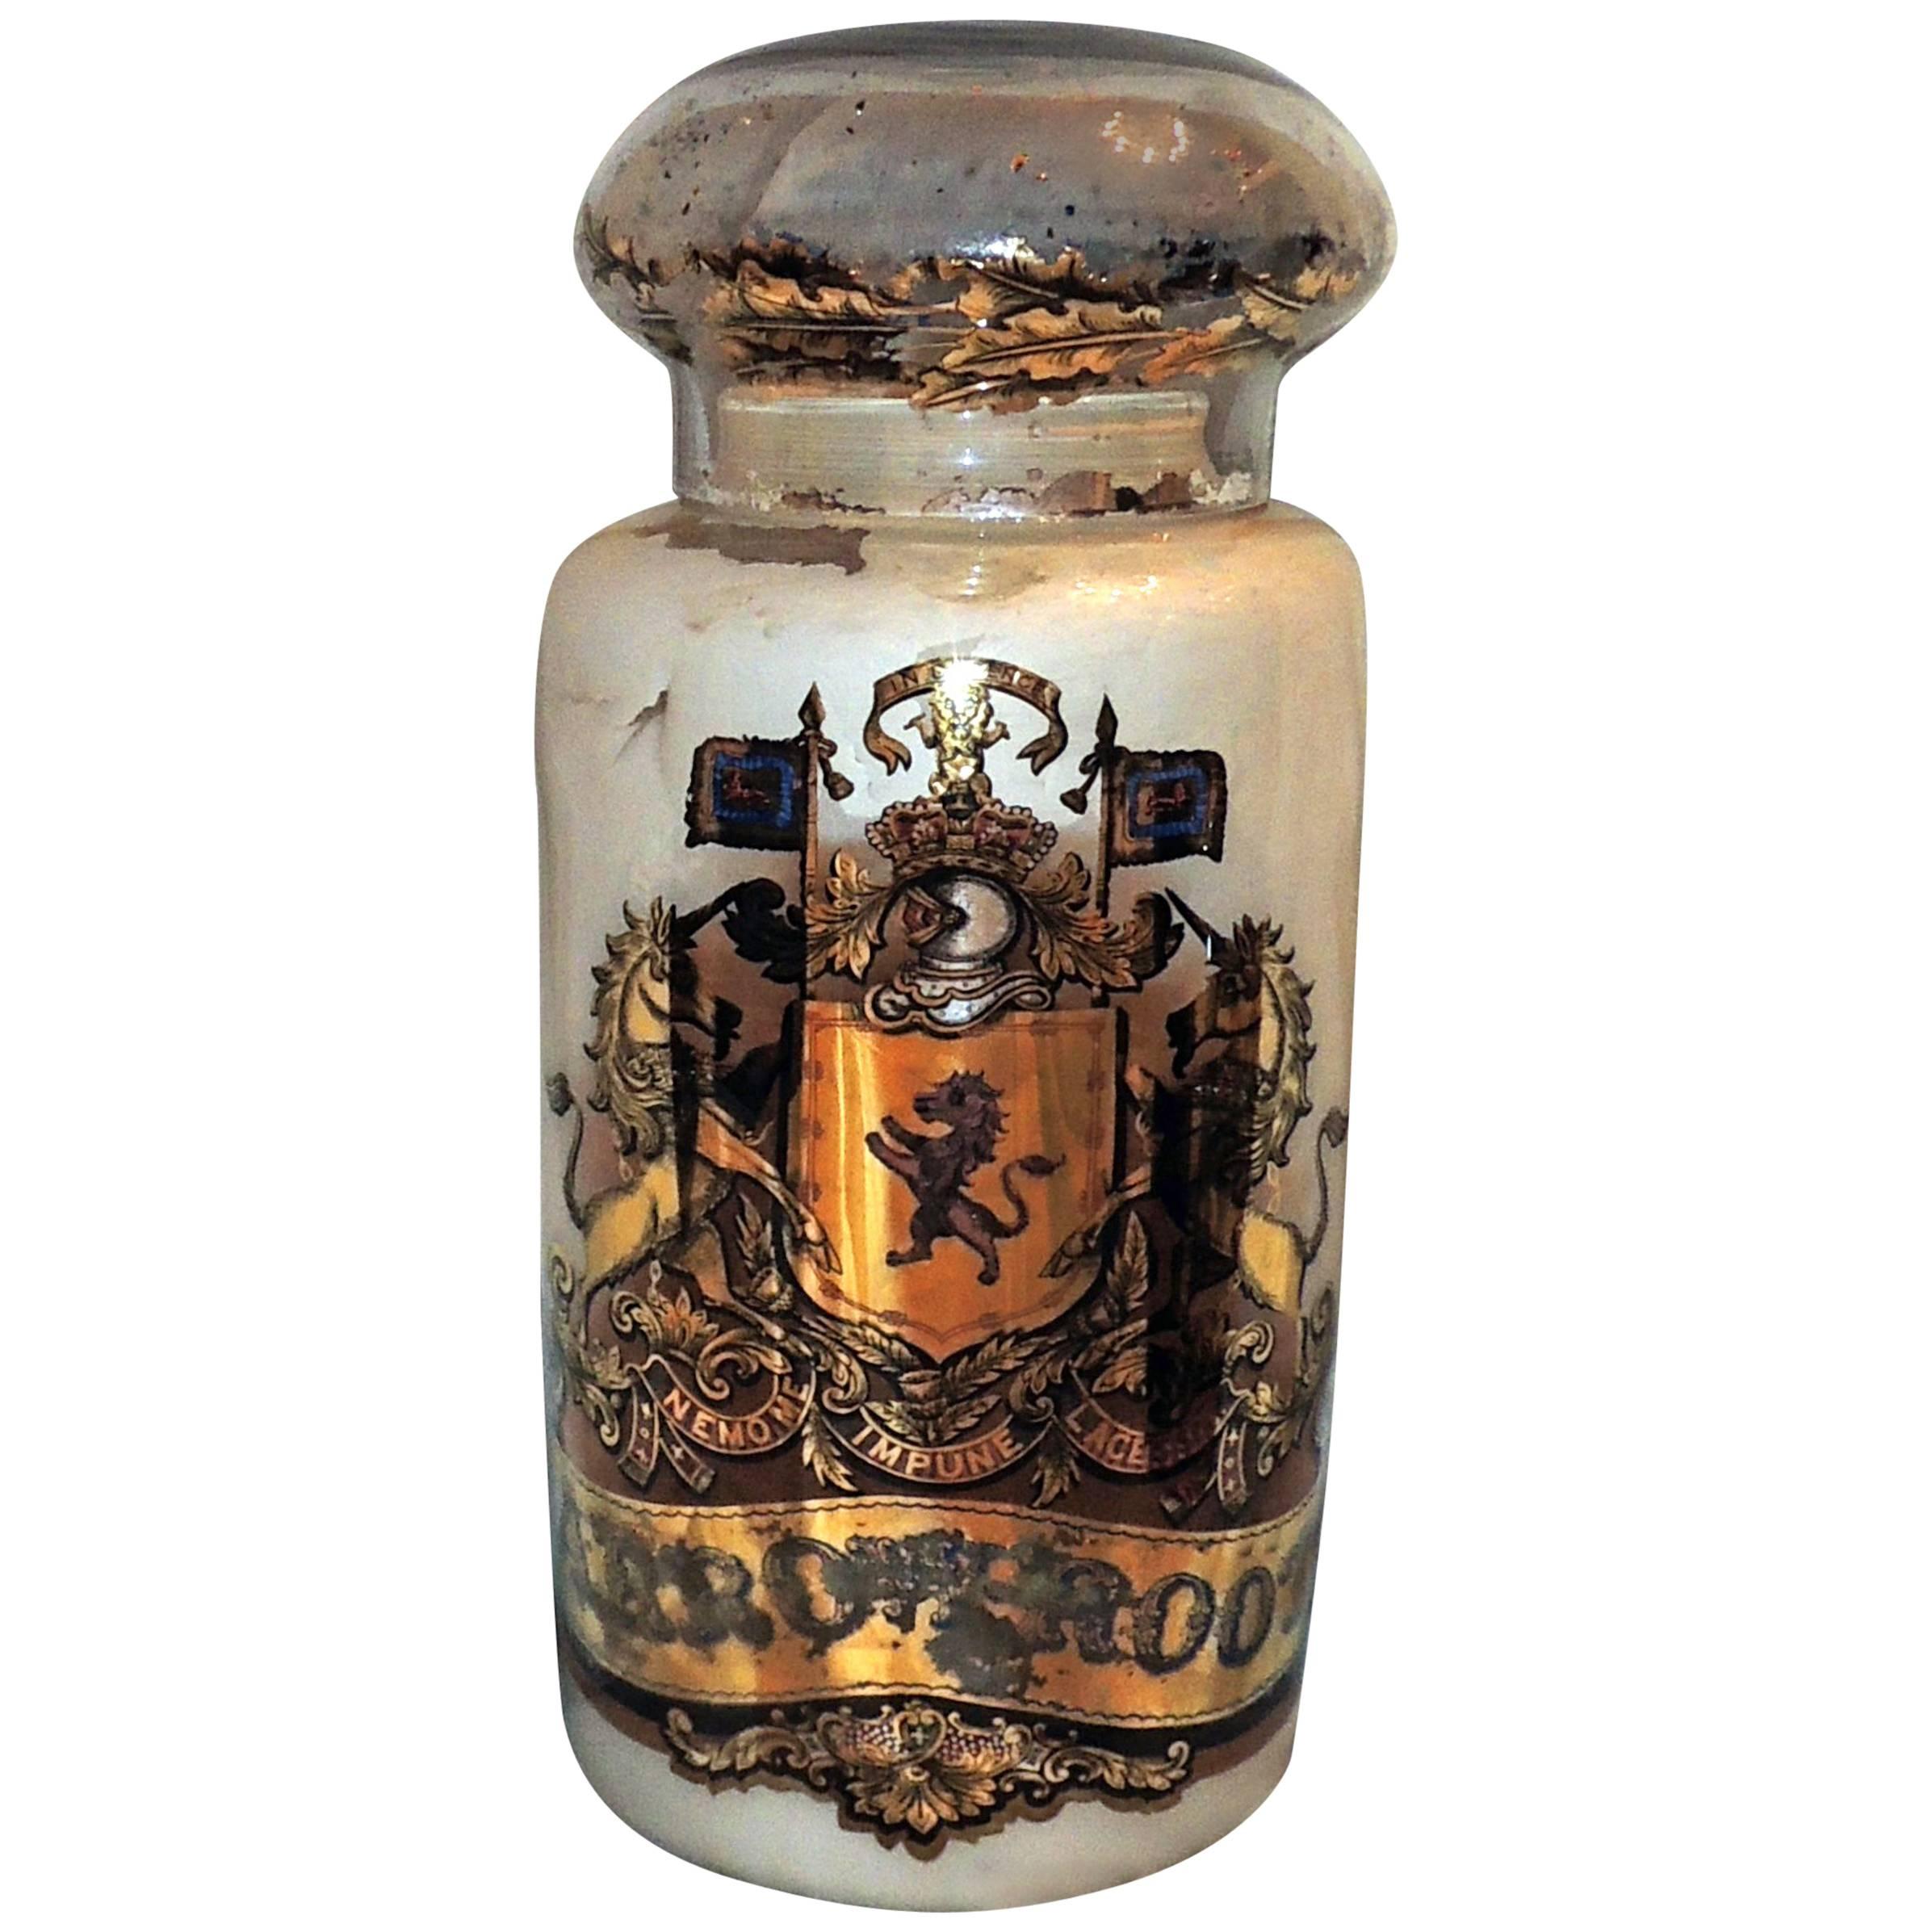 Wonderful Vintage White Pharmacy Blown Glass Apothecary Jar